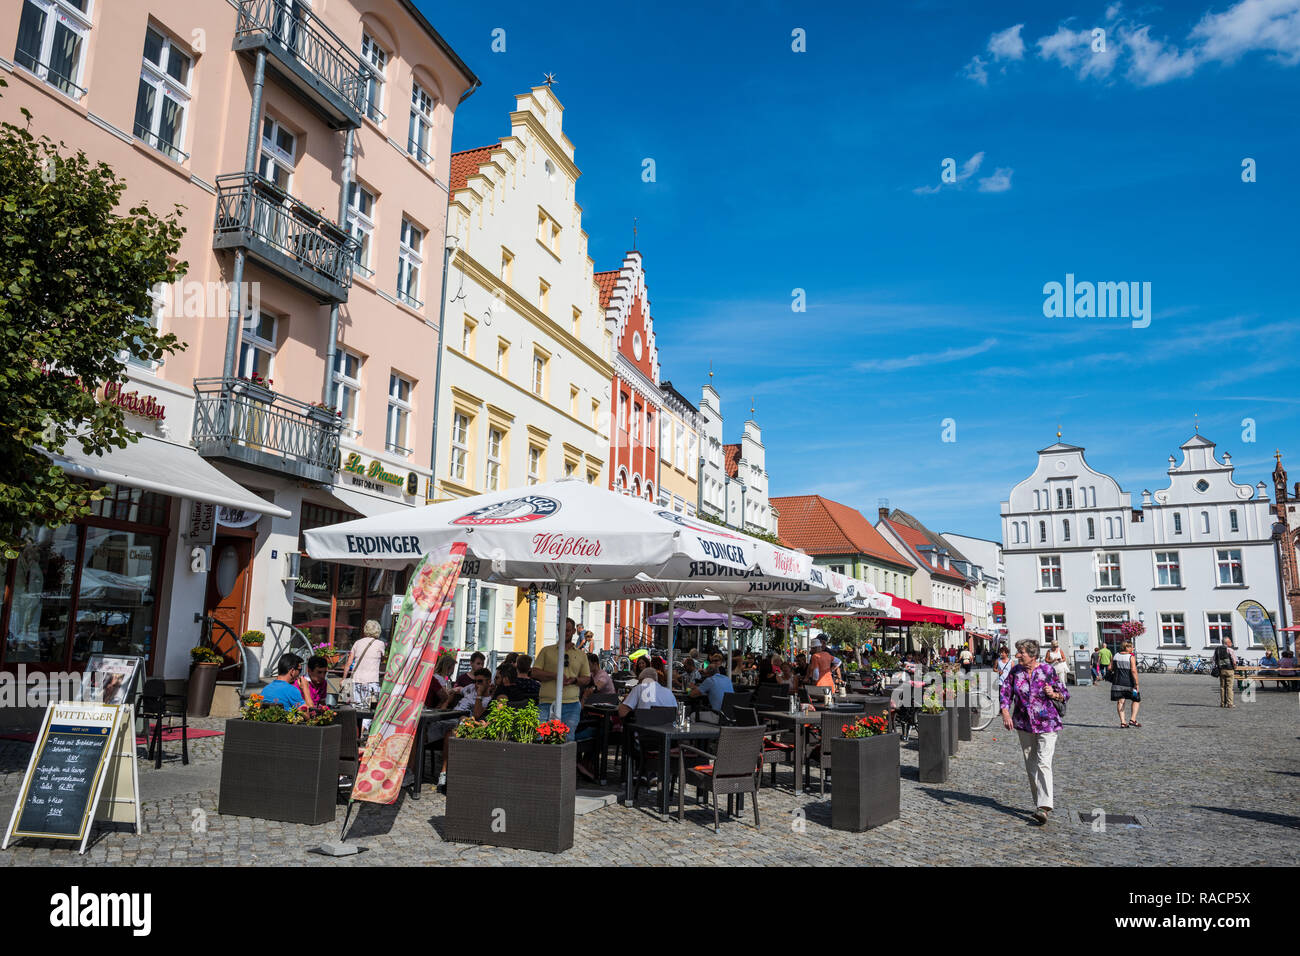 Central market square, Greifswald, Mecklenburg-Vorpommern, Germany, Europe Stock Photo